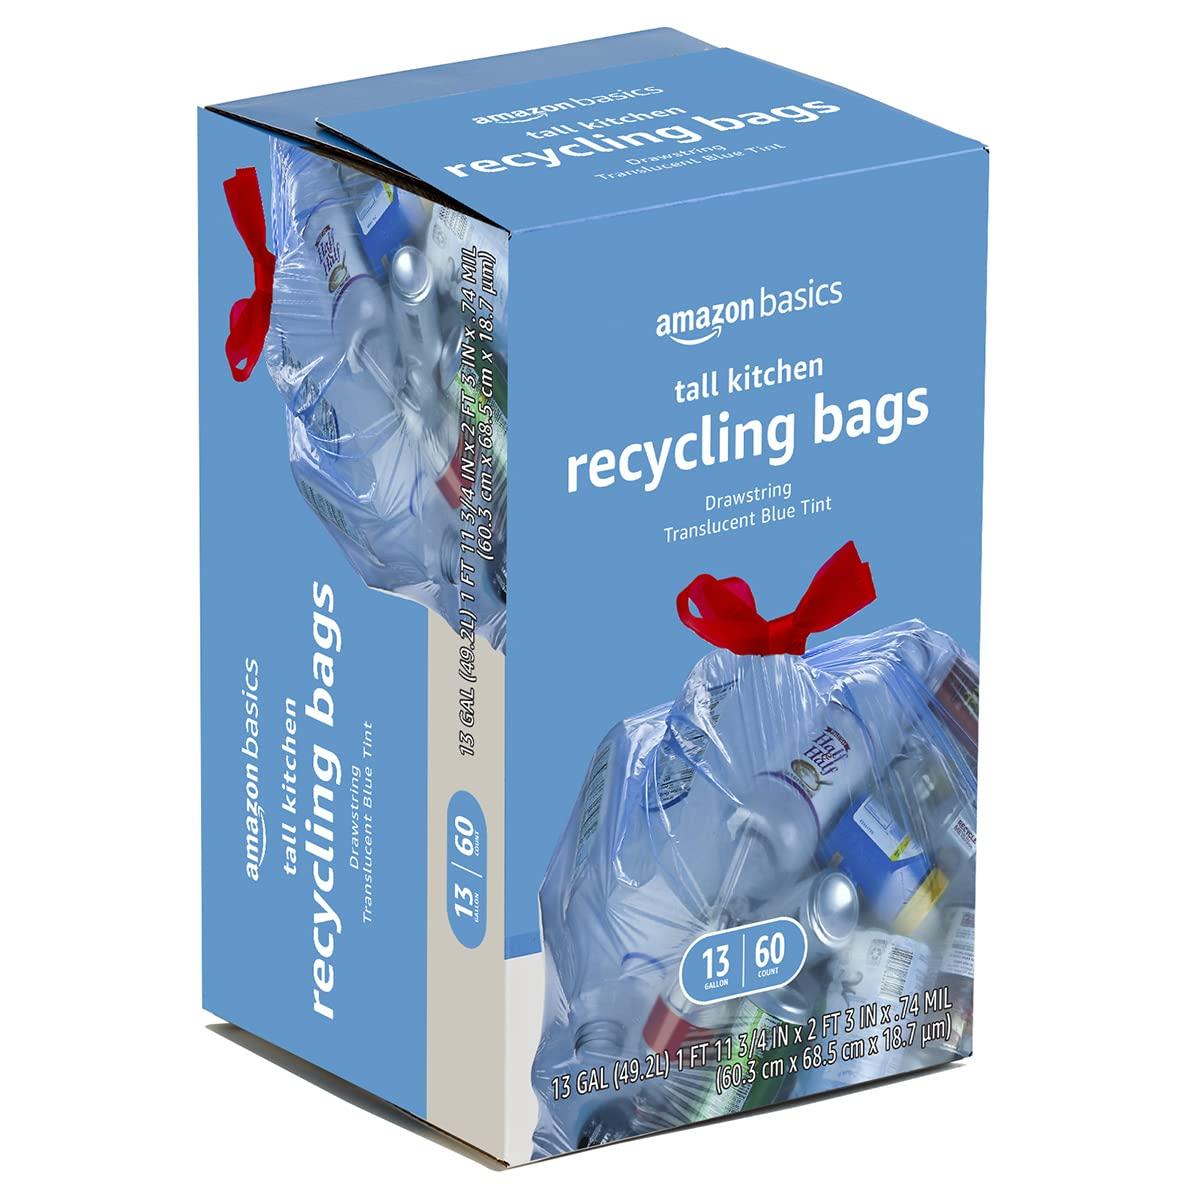 Recycling Tall Kitchen Drawstring Blue Bags